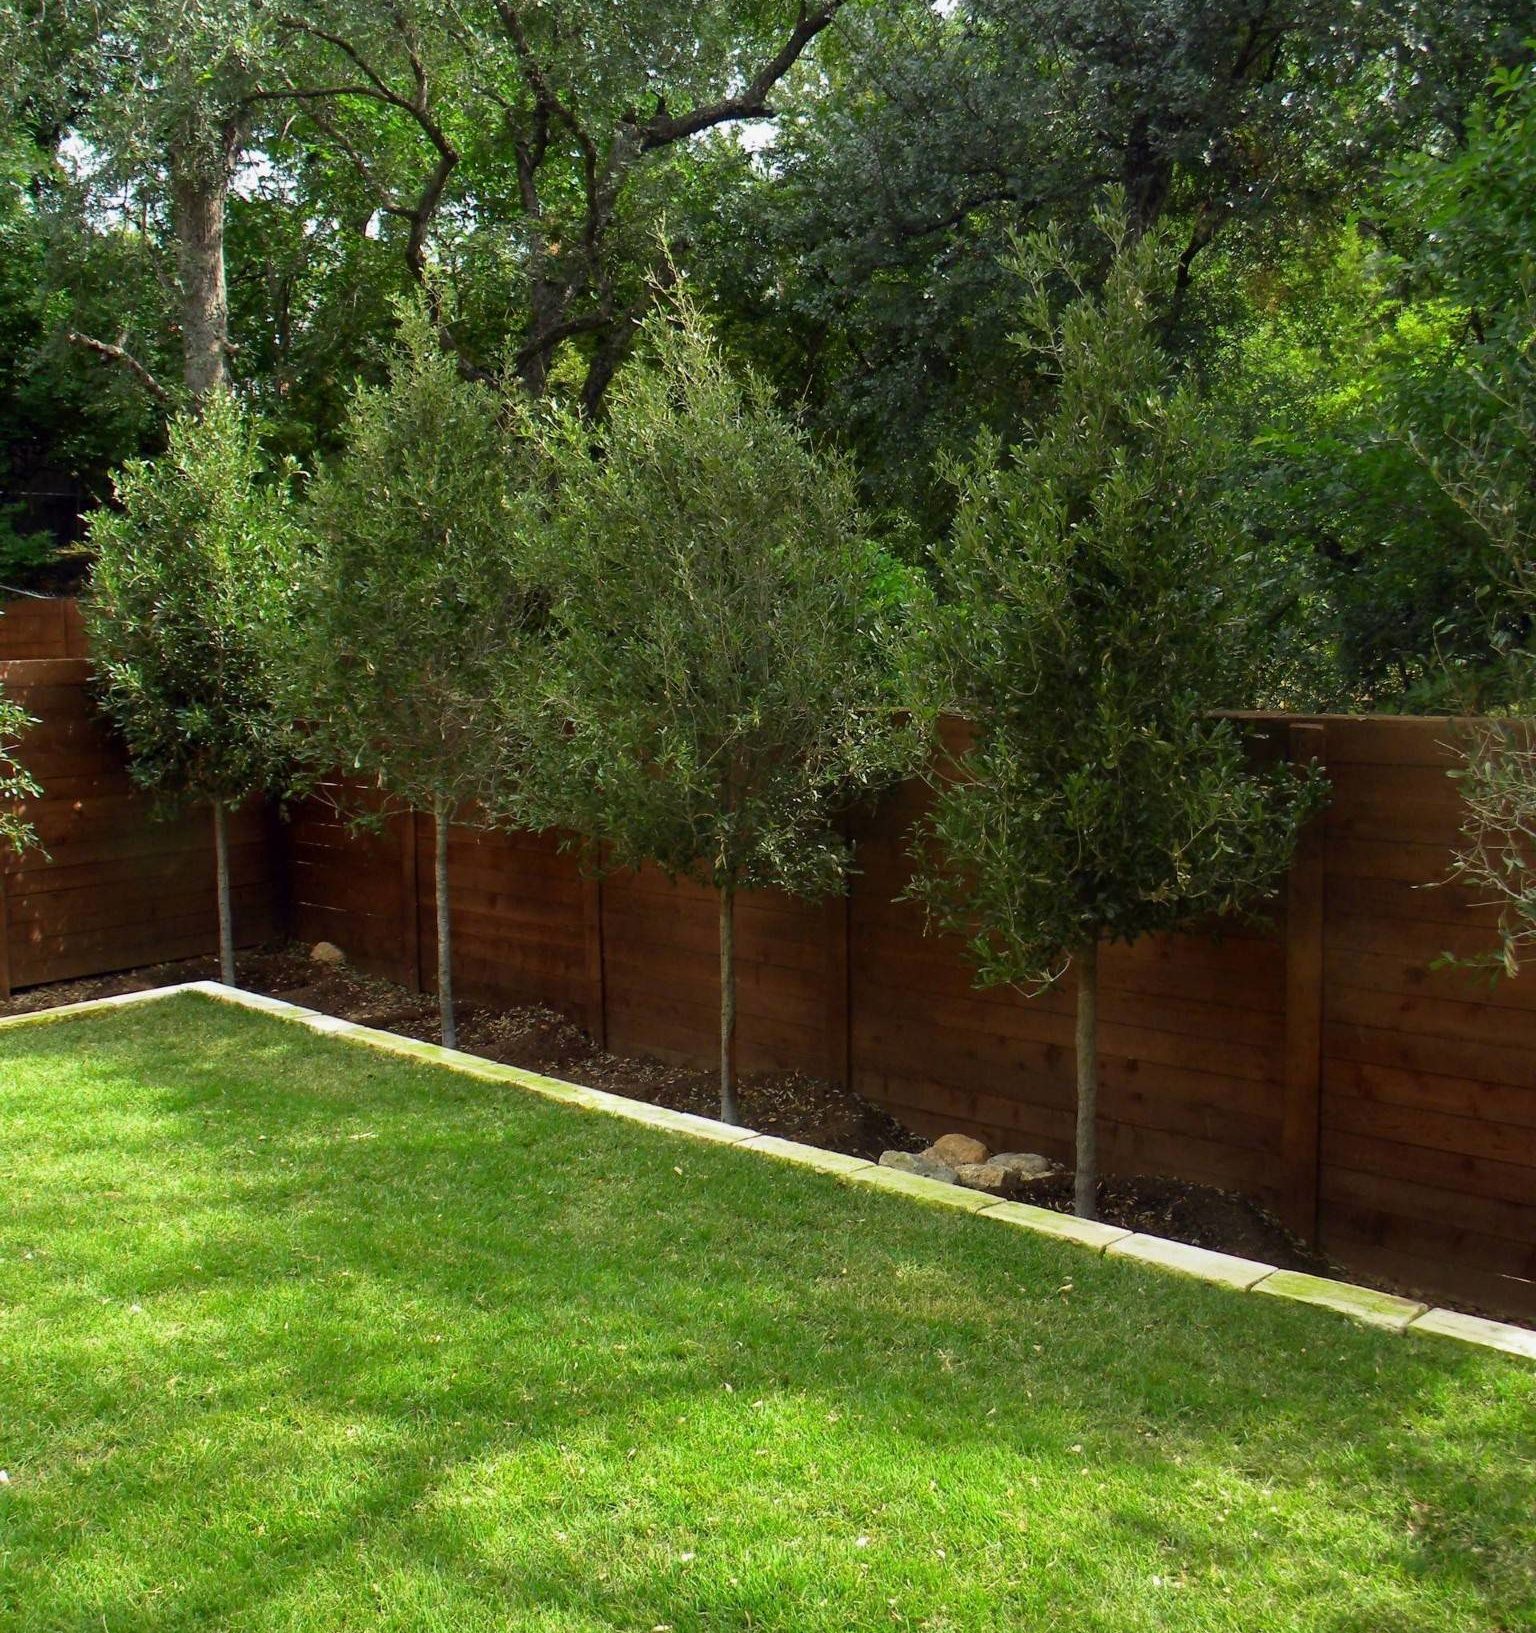 wooden fence in grassy backyard